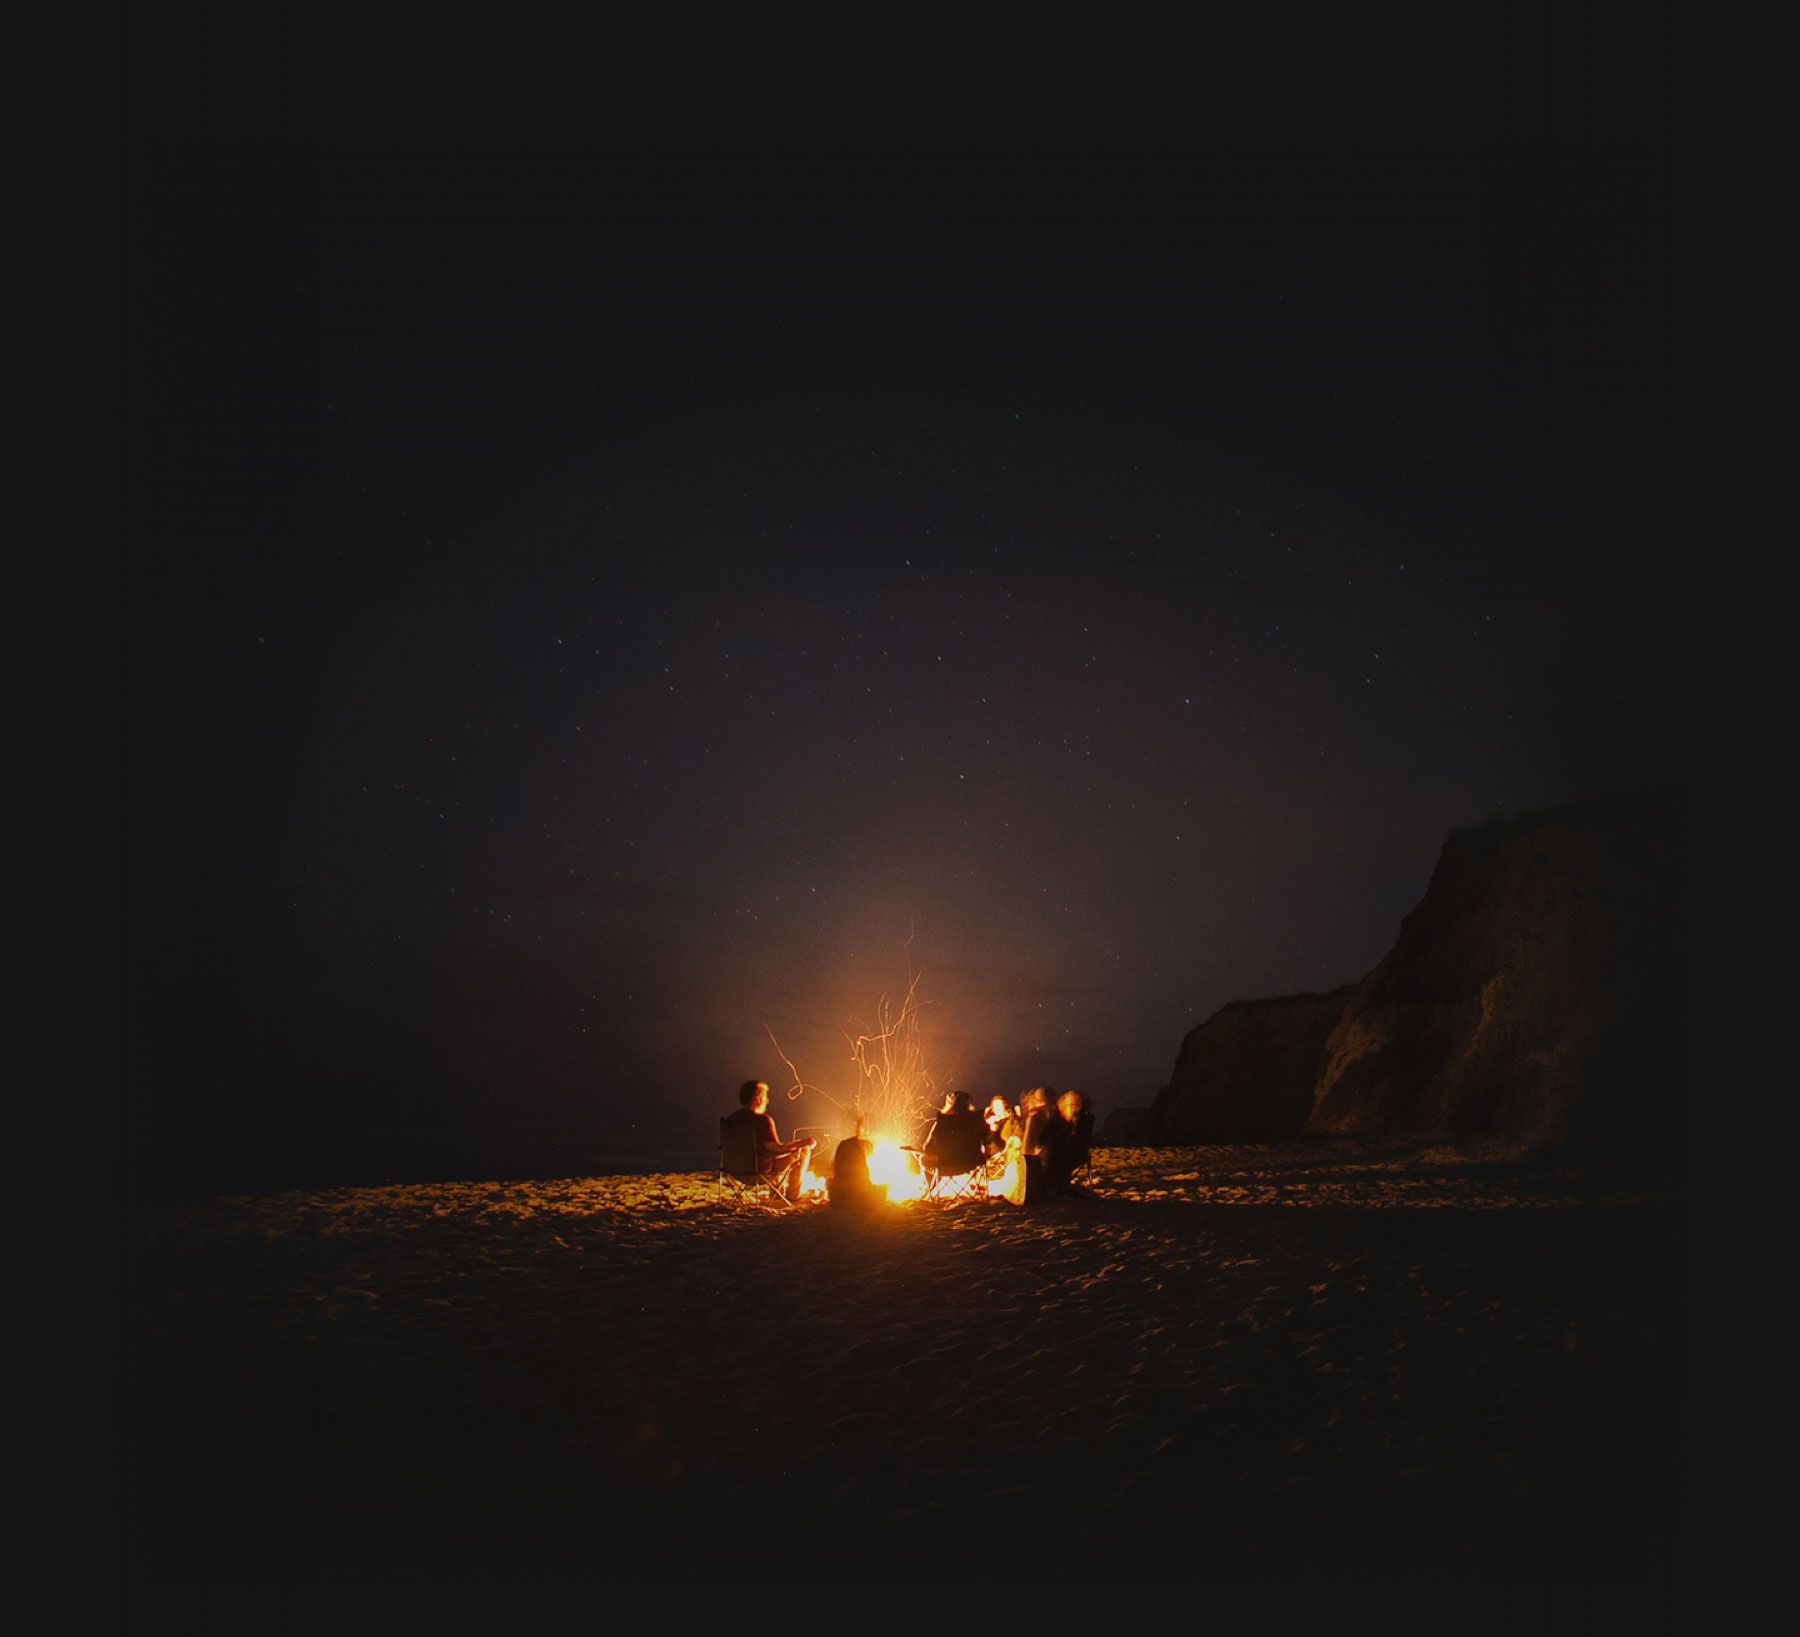 Sleepless team gathered around a fire on the beach